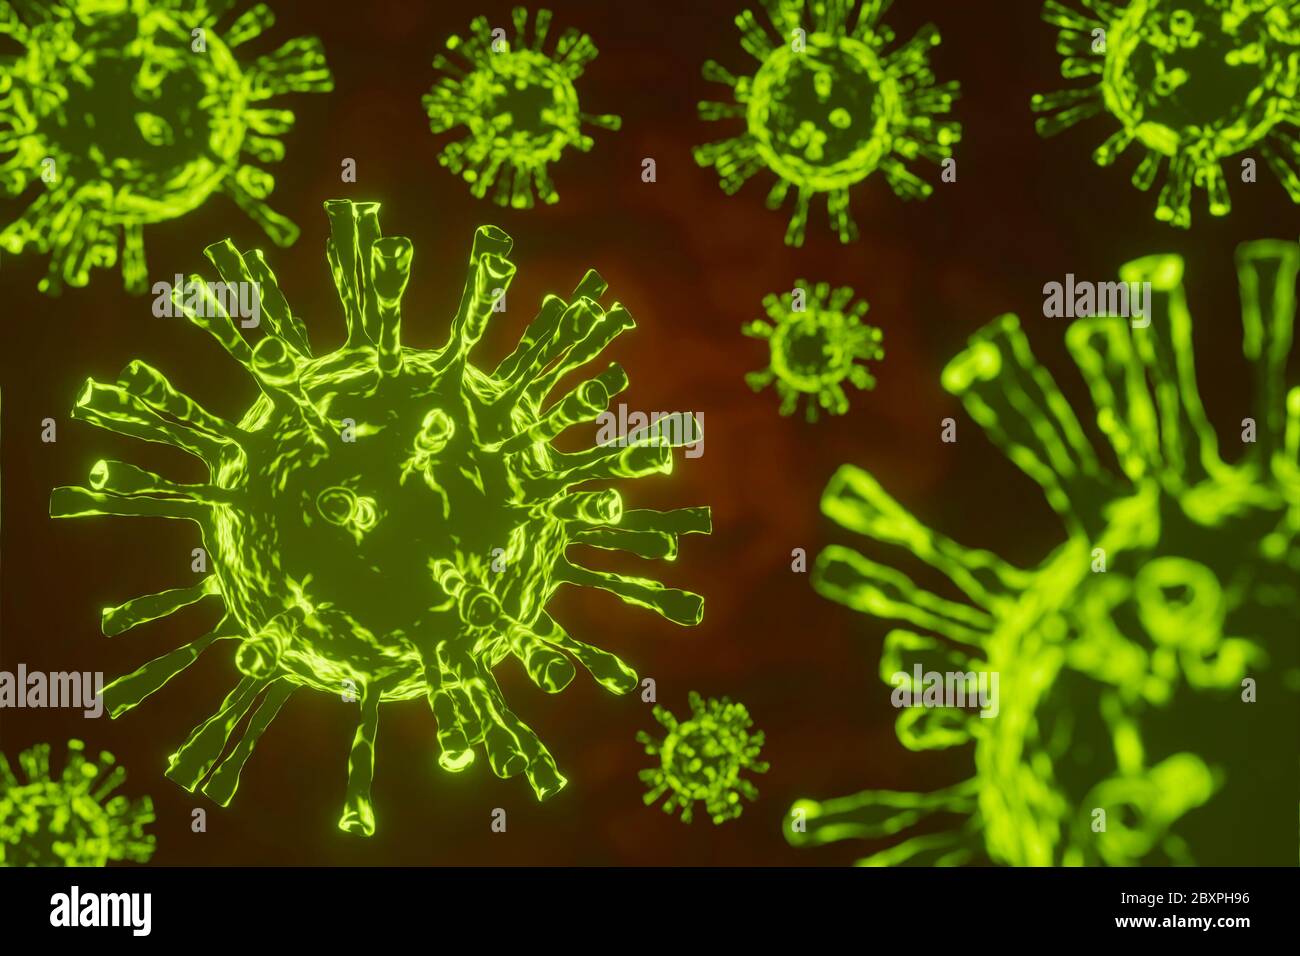 3d rendering of virus structure coronavirus pandemic outbreak medical illustration. Covid-19. Stock Photo